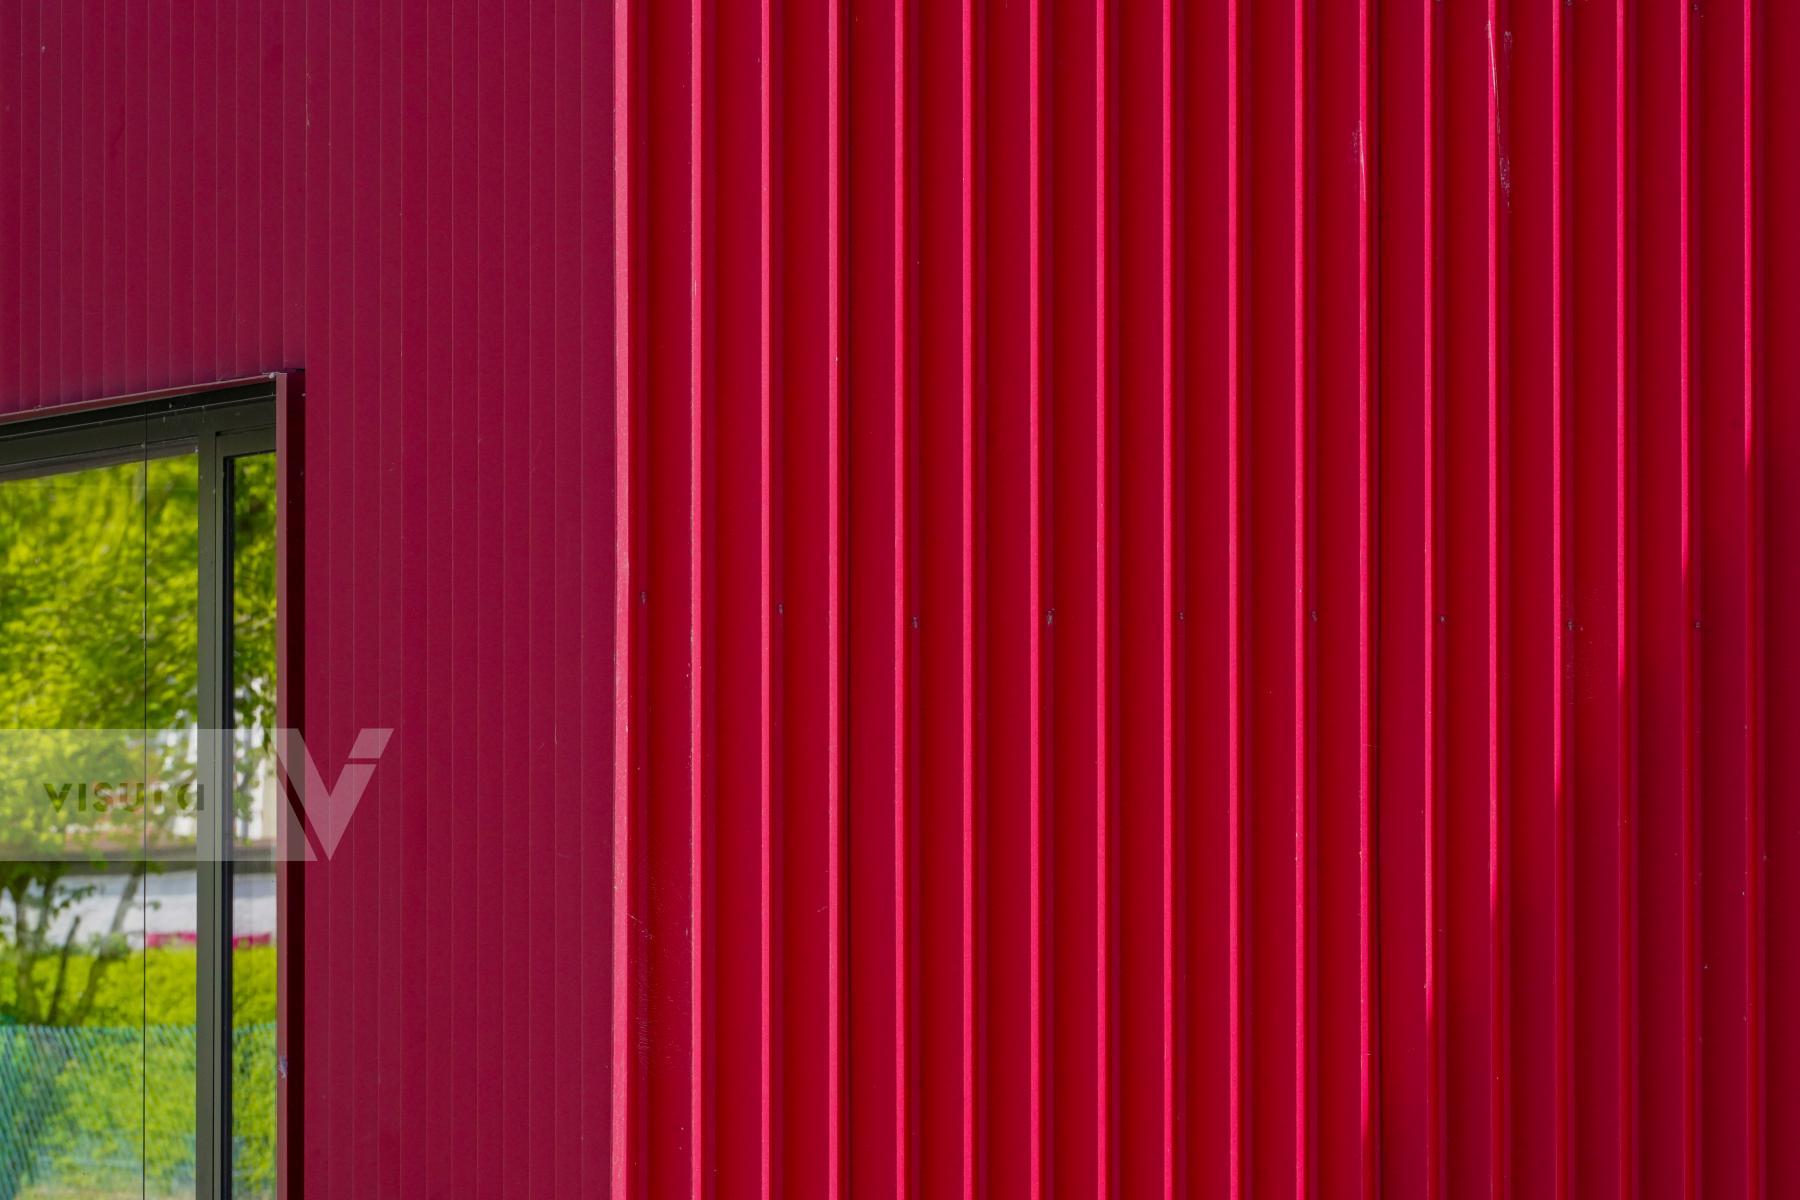 Purchase Crimson Rhythms: Vibrant red Palette by Michael Nguyen